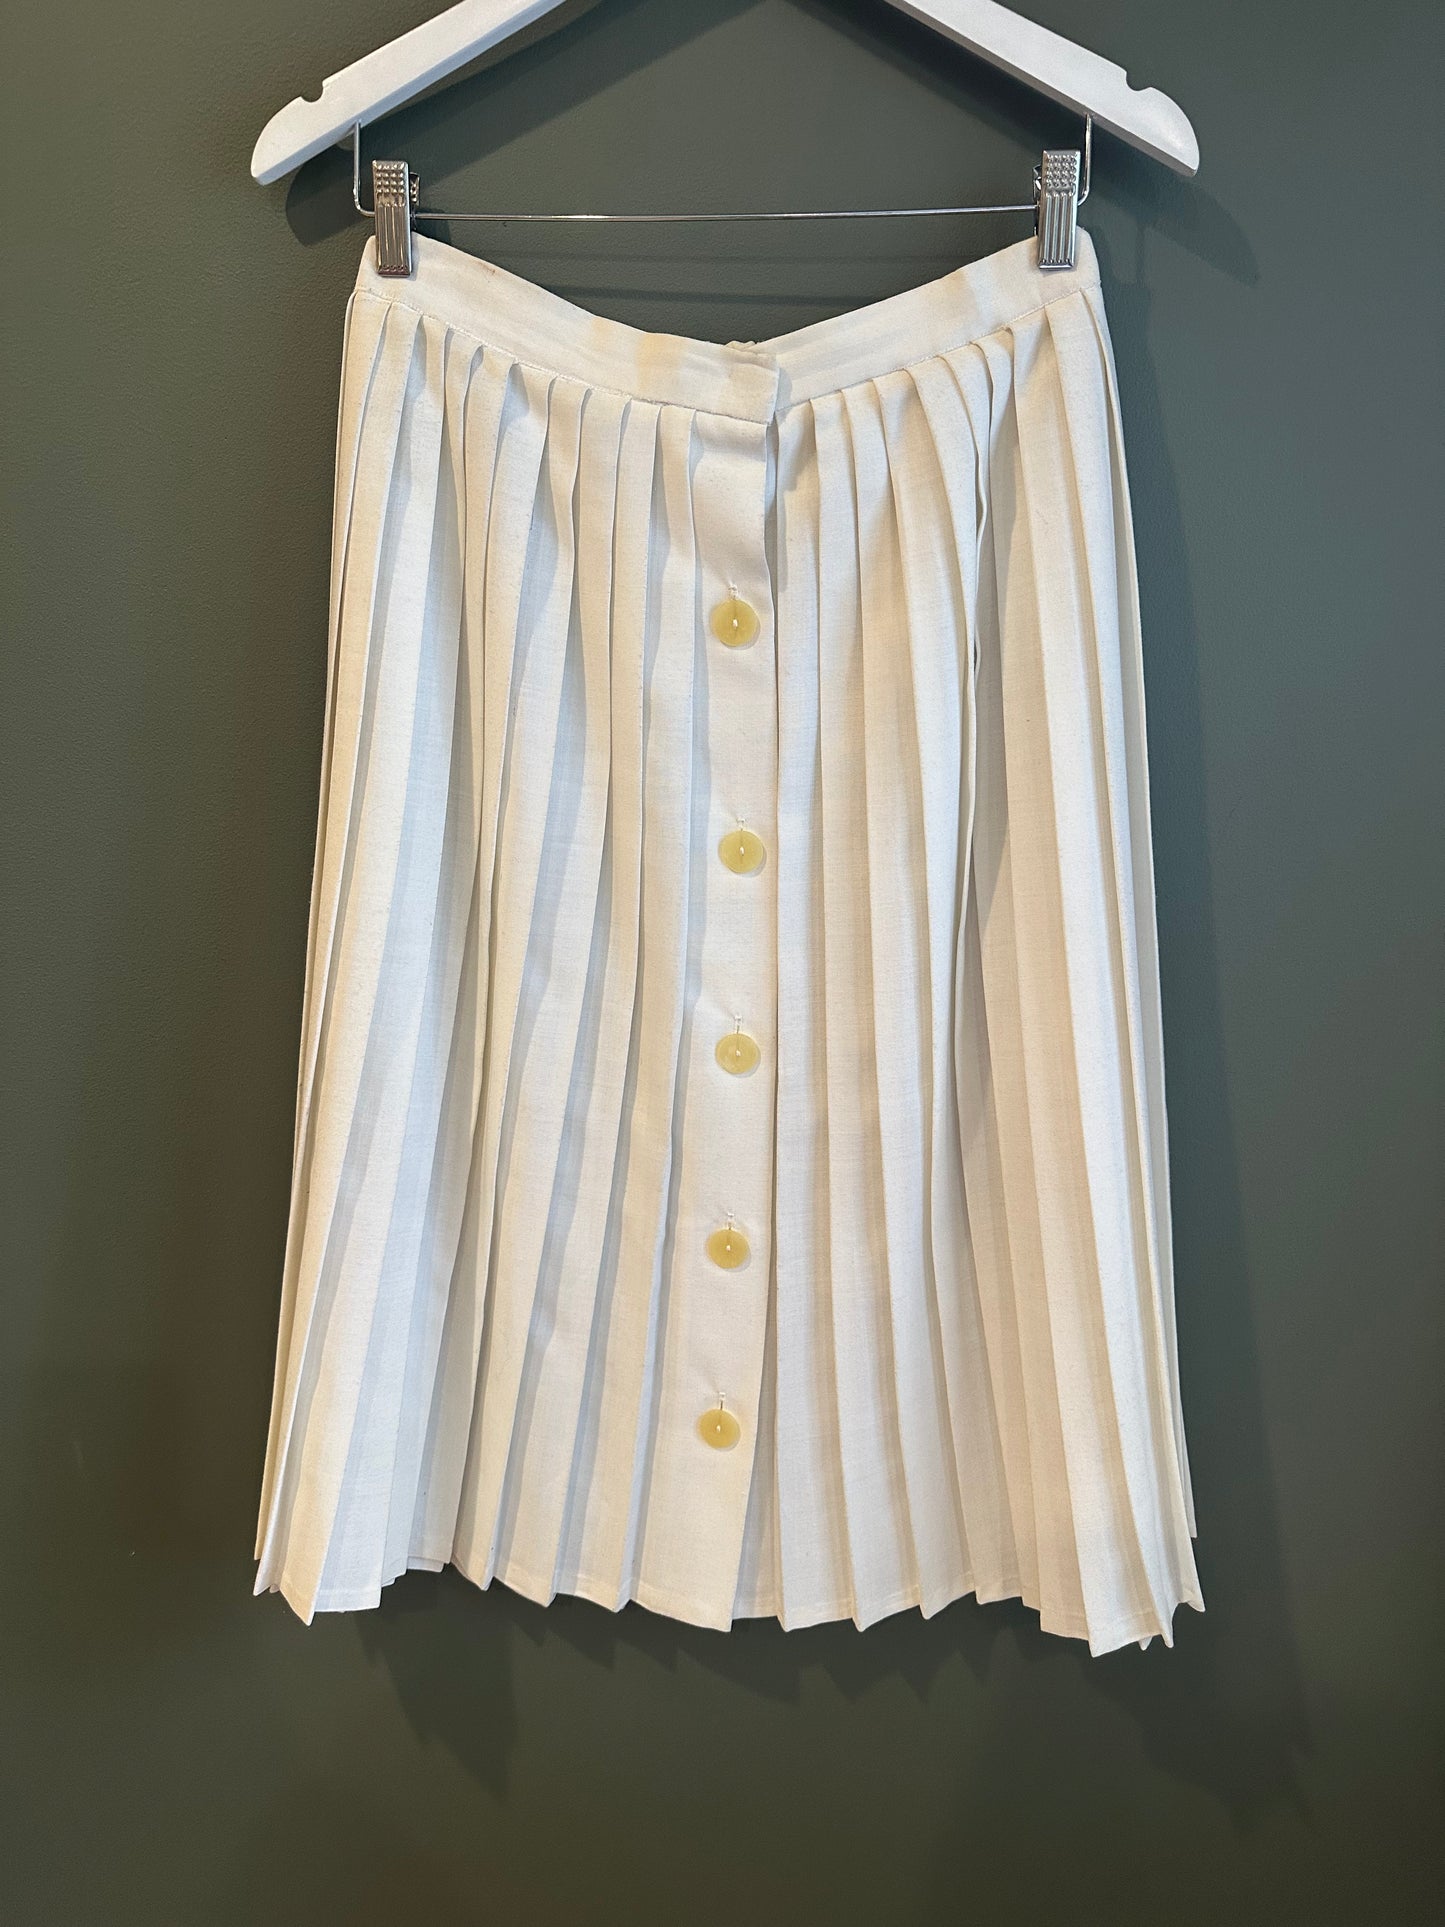 Perry Skirt, 1970’s, 28” Waist